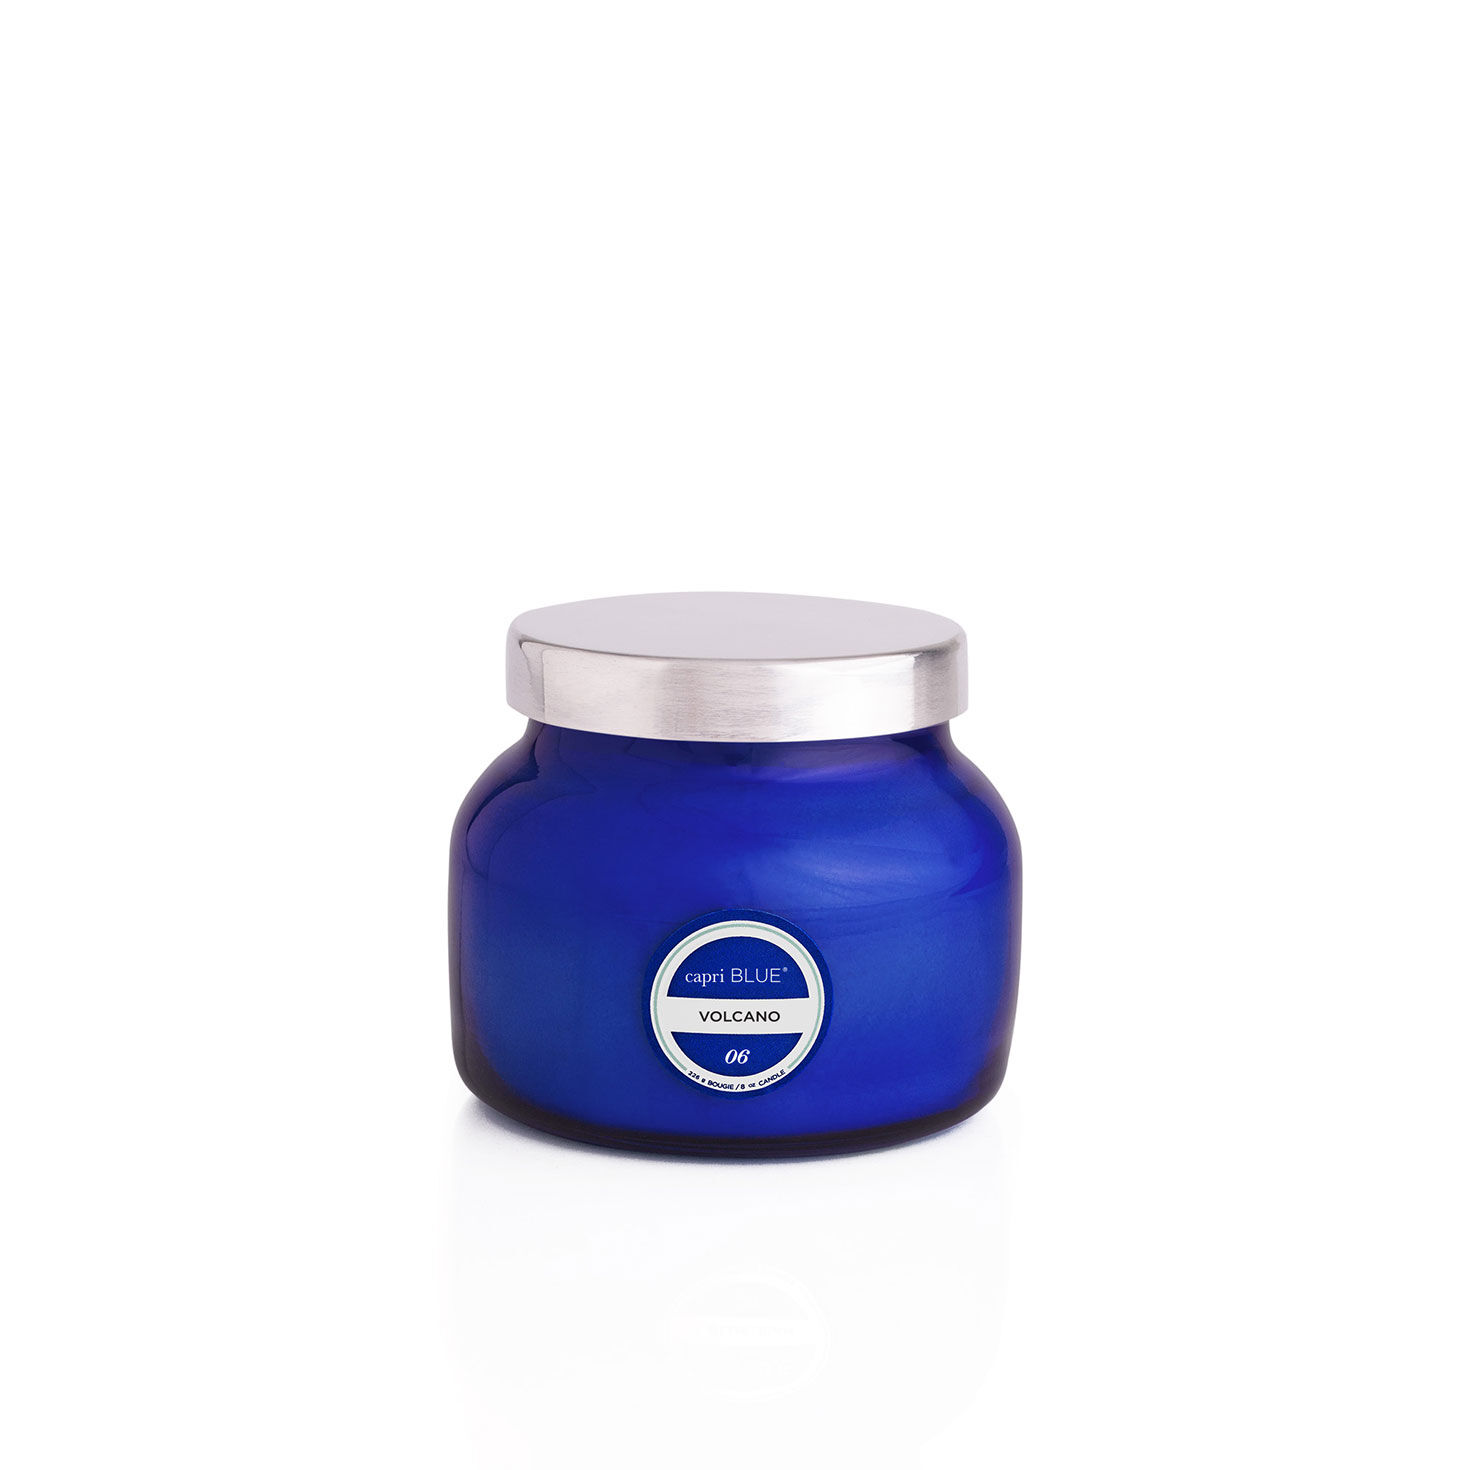 Capri Blue Volcano Petite Jar Candle, 8 oz. for only USD 24.00 | Hallmark